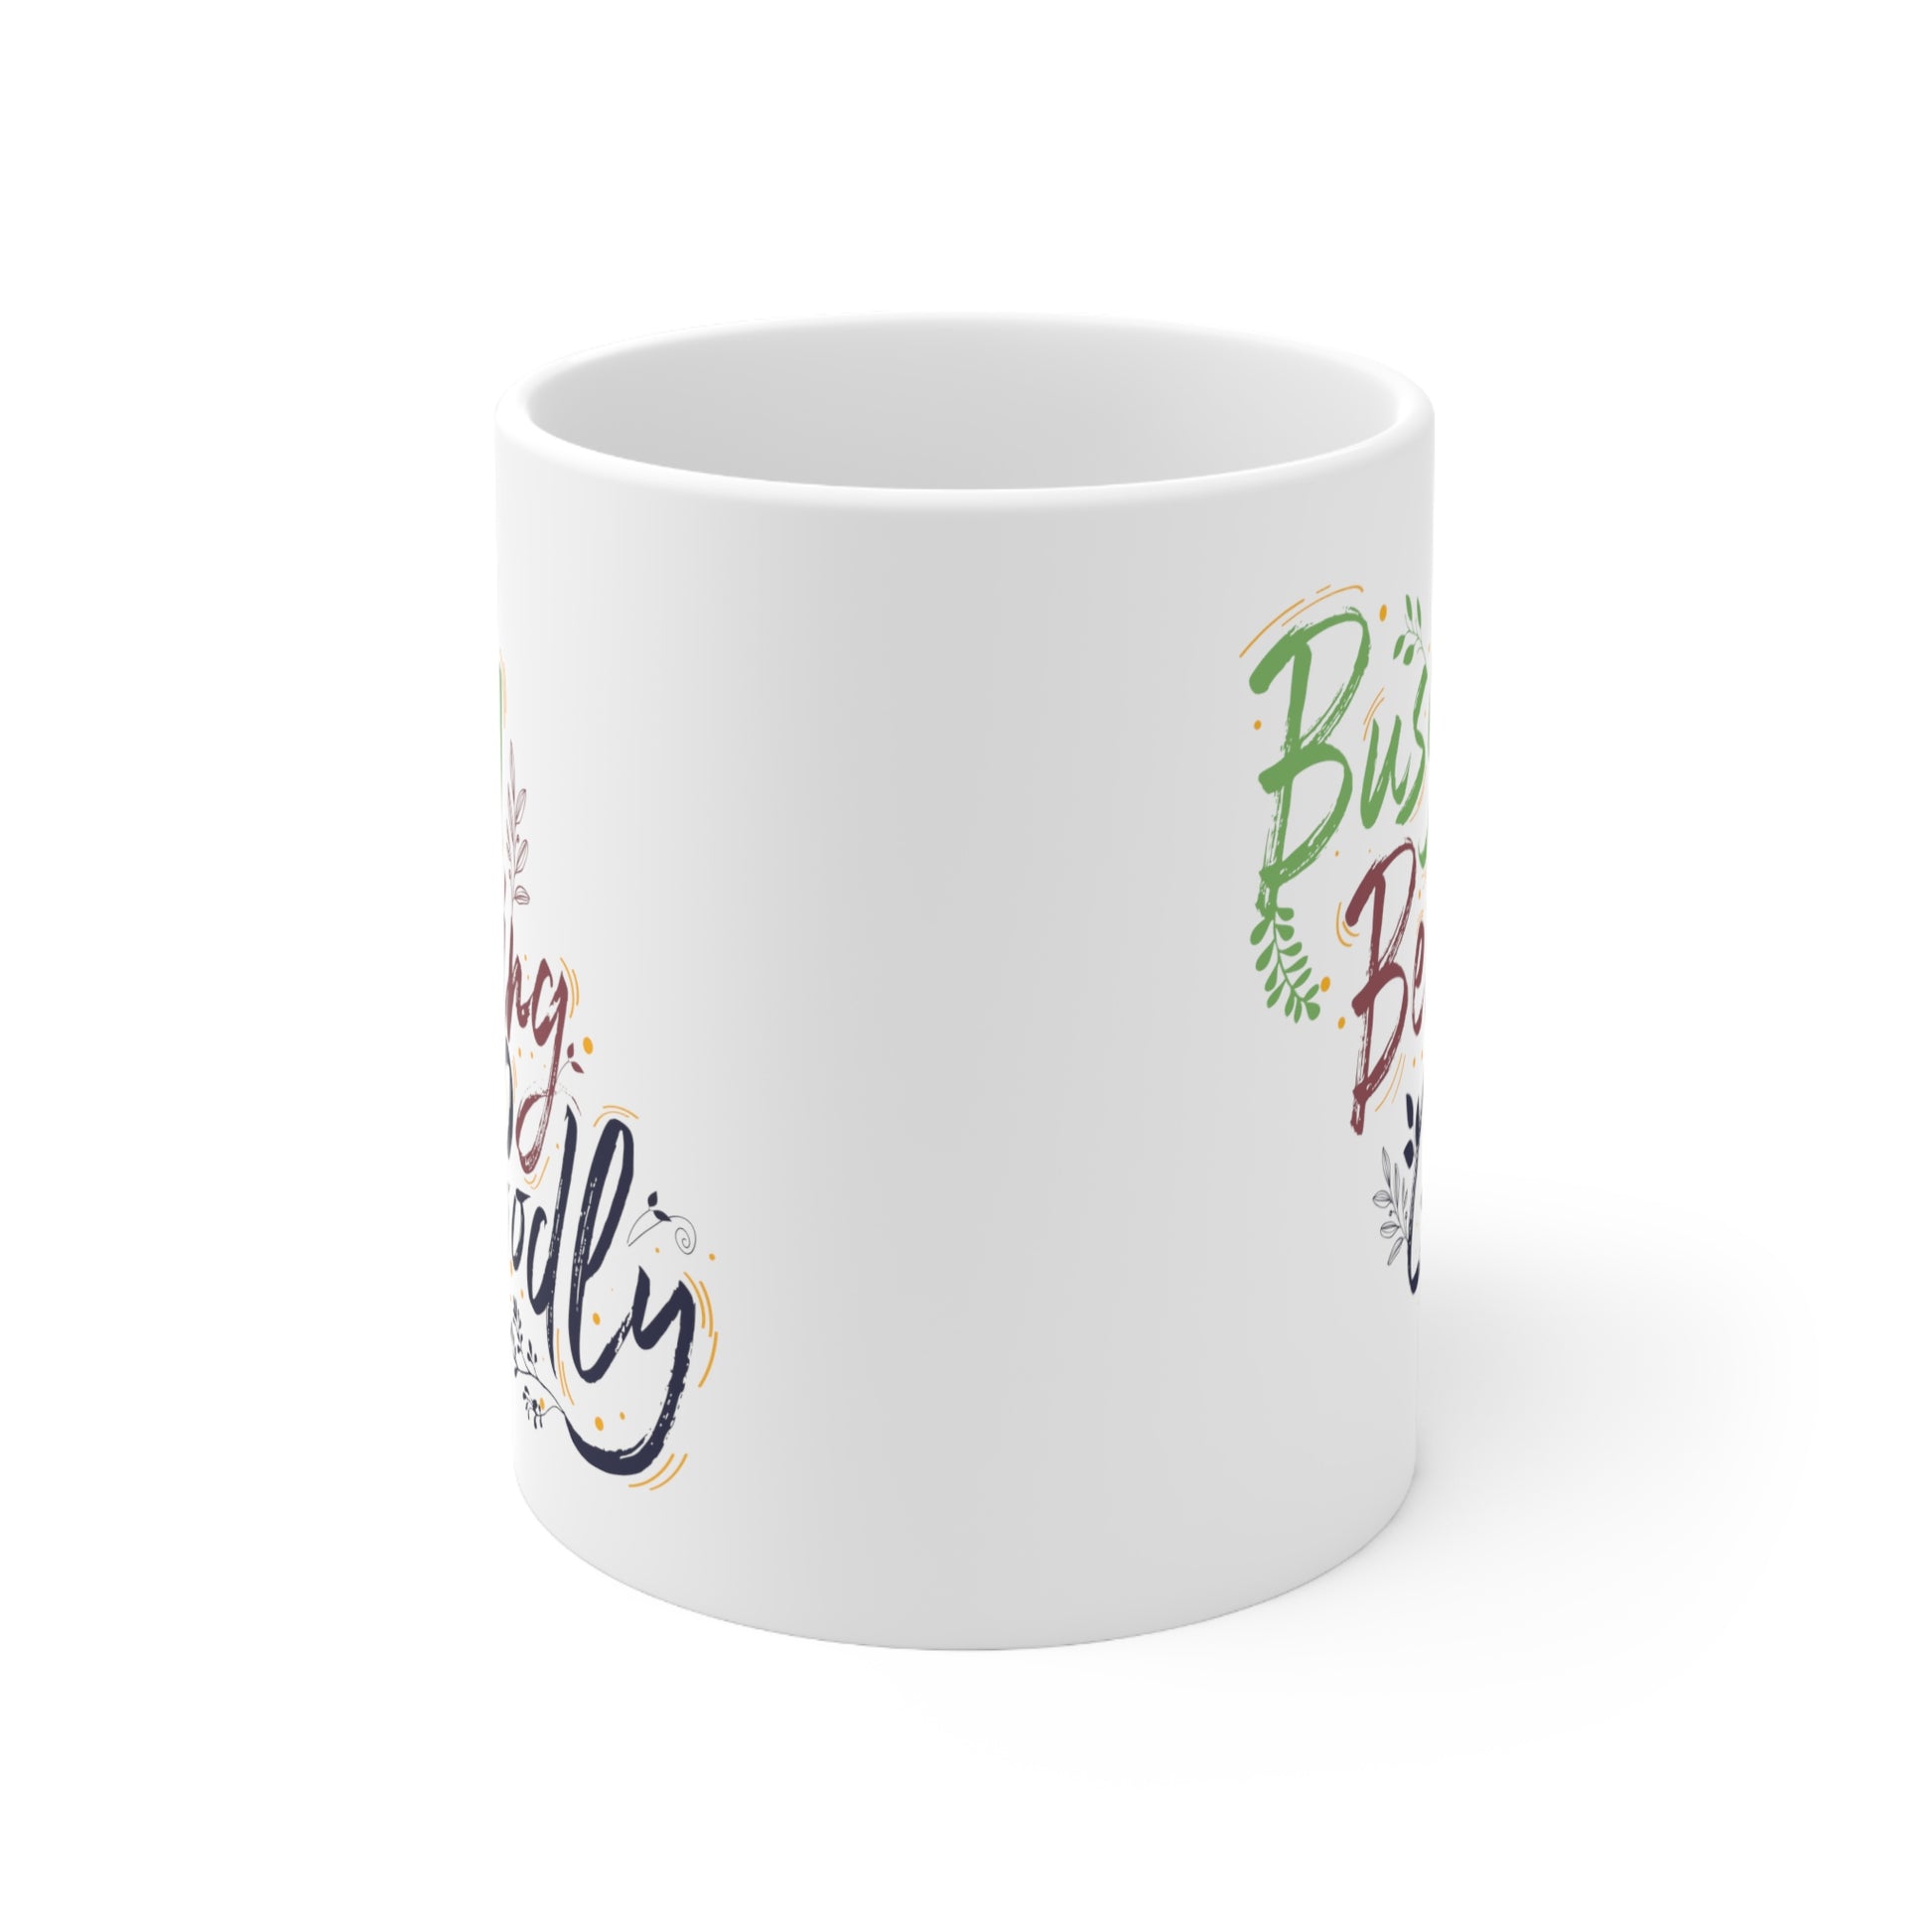 Busy Being Godly Christian White Ceramic Mug 11oz (double sided print) Printify